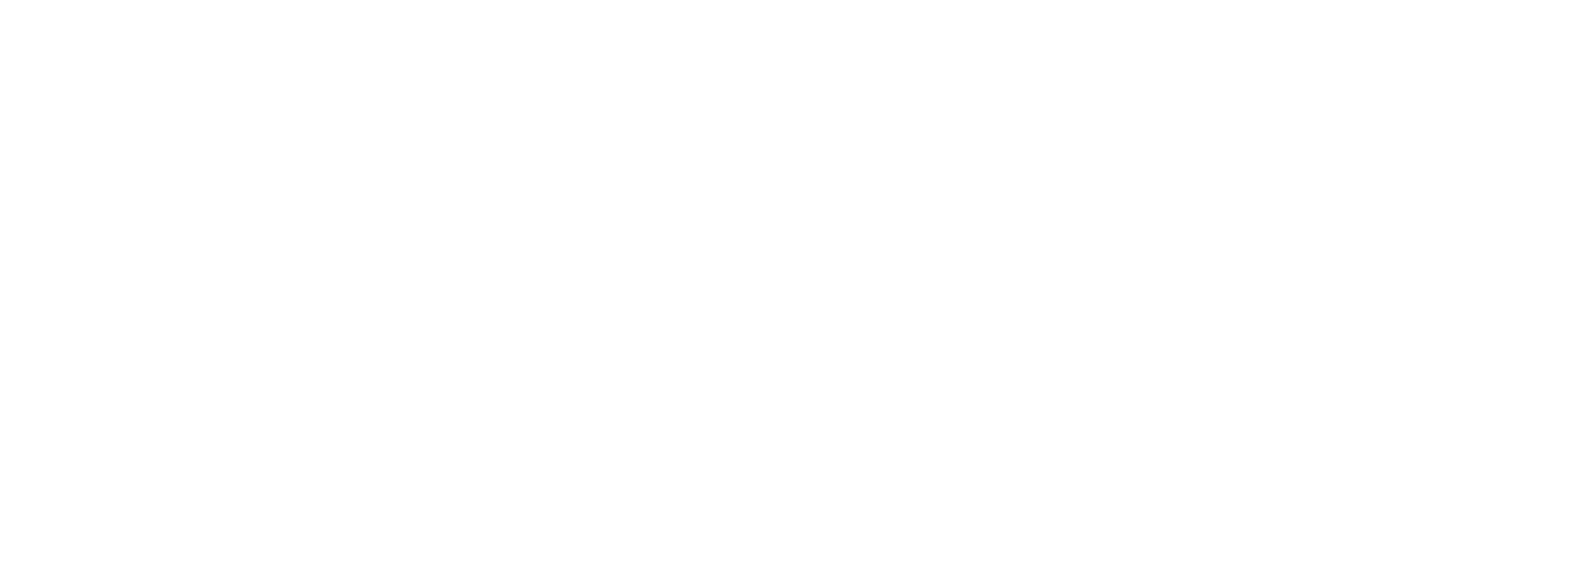 Jastrzebska Spólka Weglowa logo large for dark backgrounds (transparent PNG)